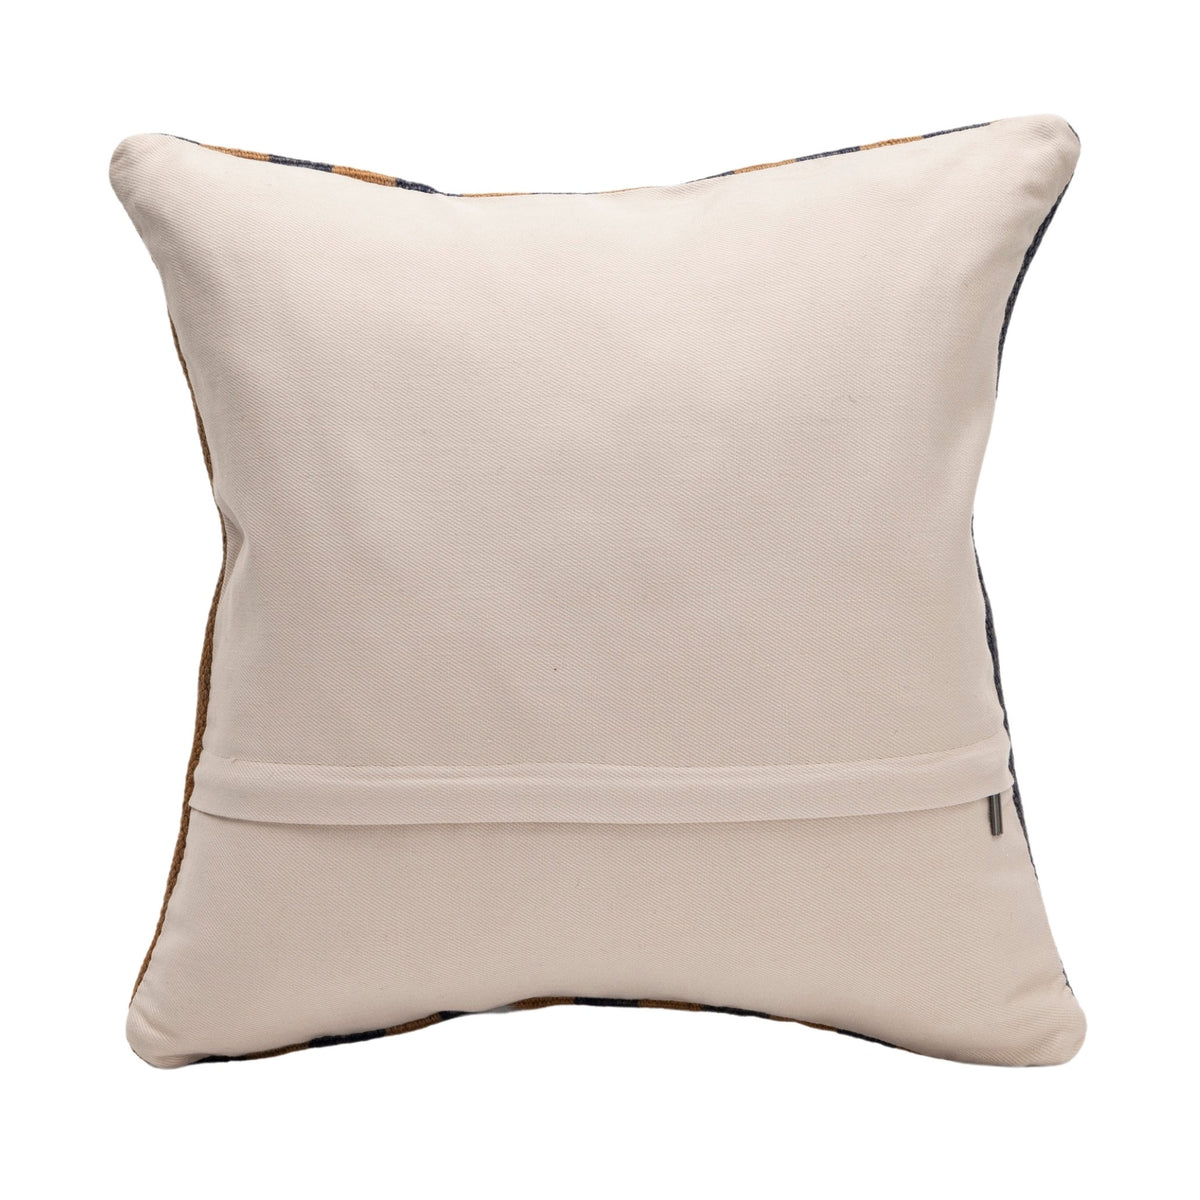  16x16 Bohemian Kilim Pillow Cover